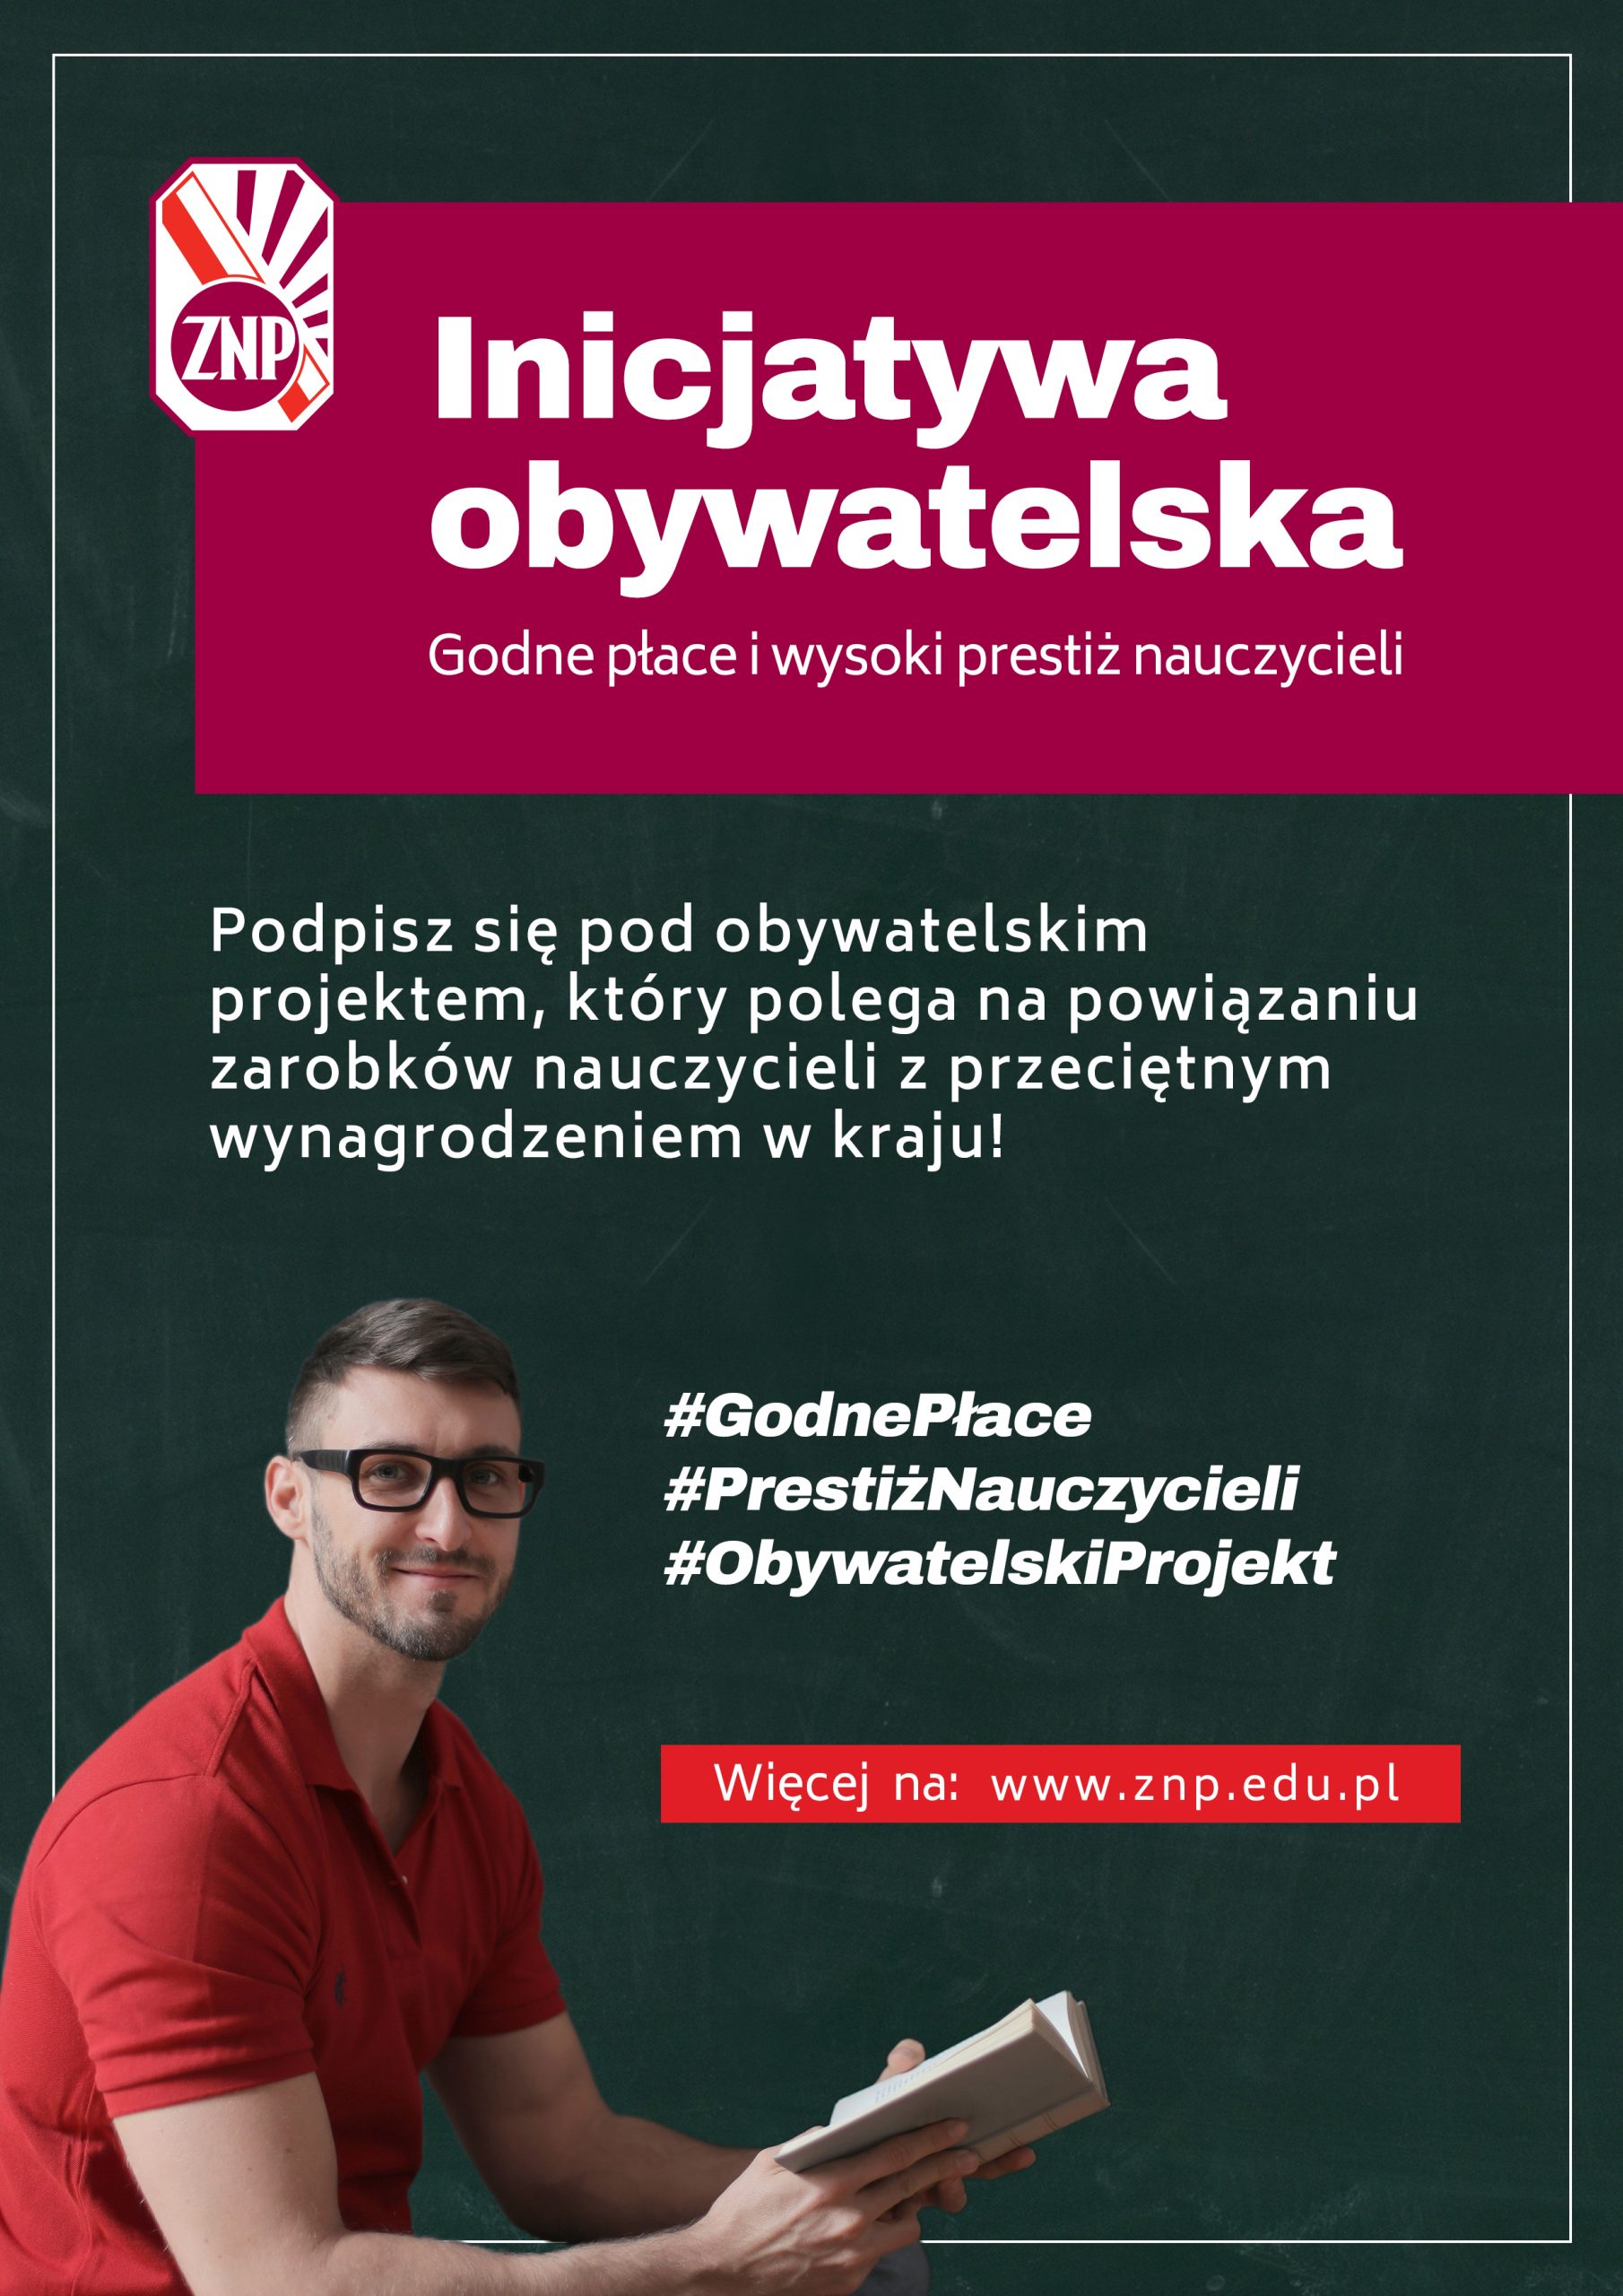 znp_plakat_A4_inicjatywa_obywatelska-2-scaled